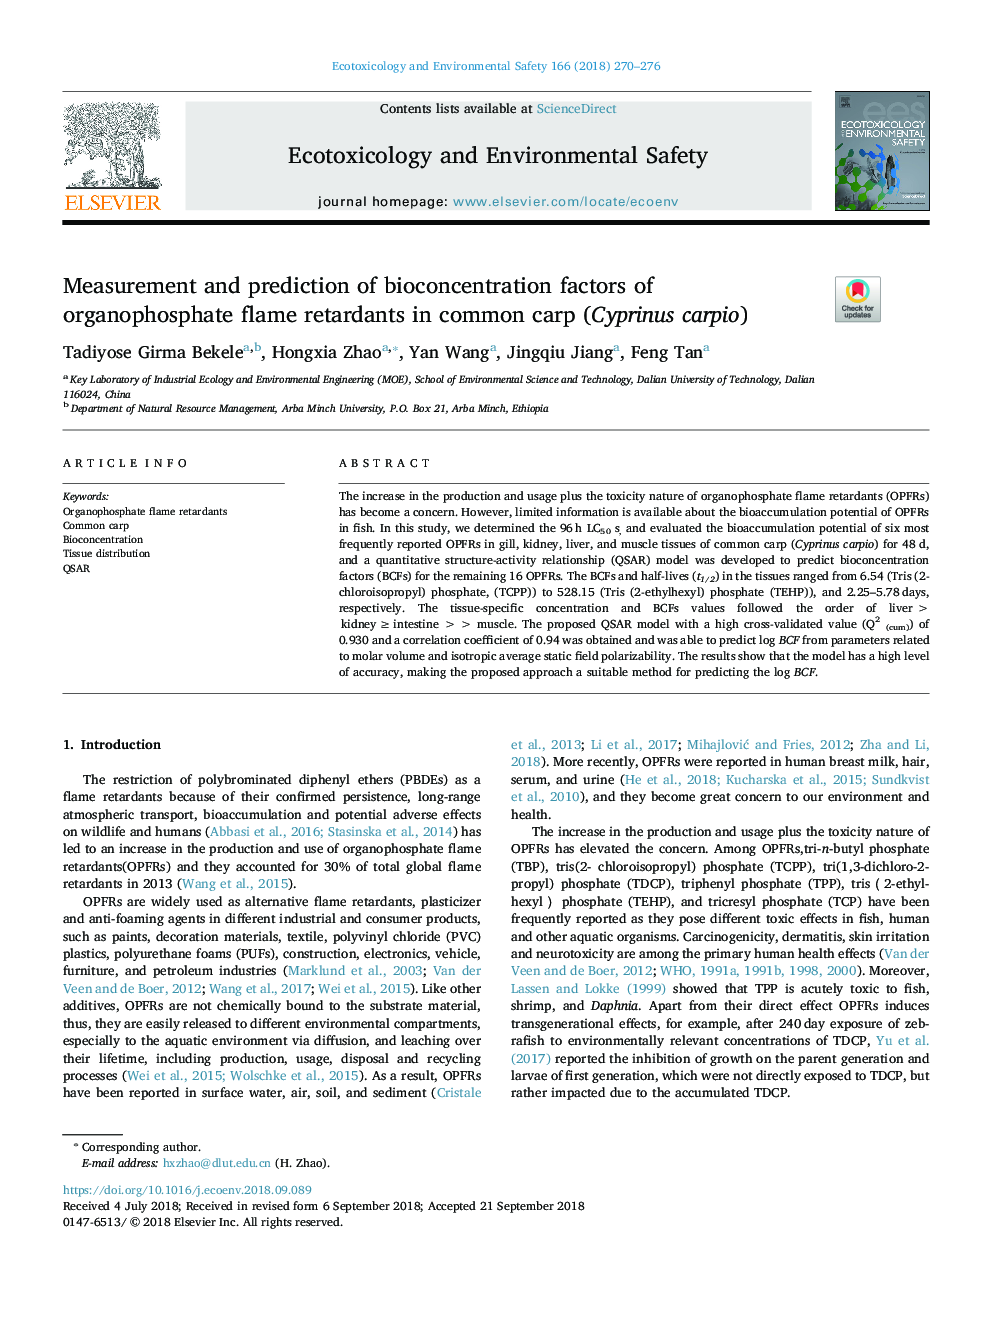 Measurement and prediction of bioconcentration factors of organophosphate flame retardants in common carp (Cyprinus carpio)